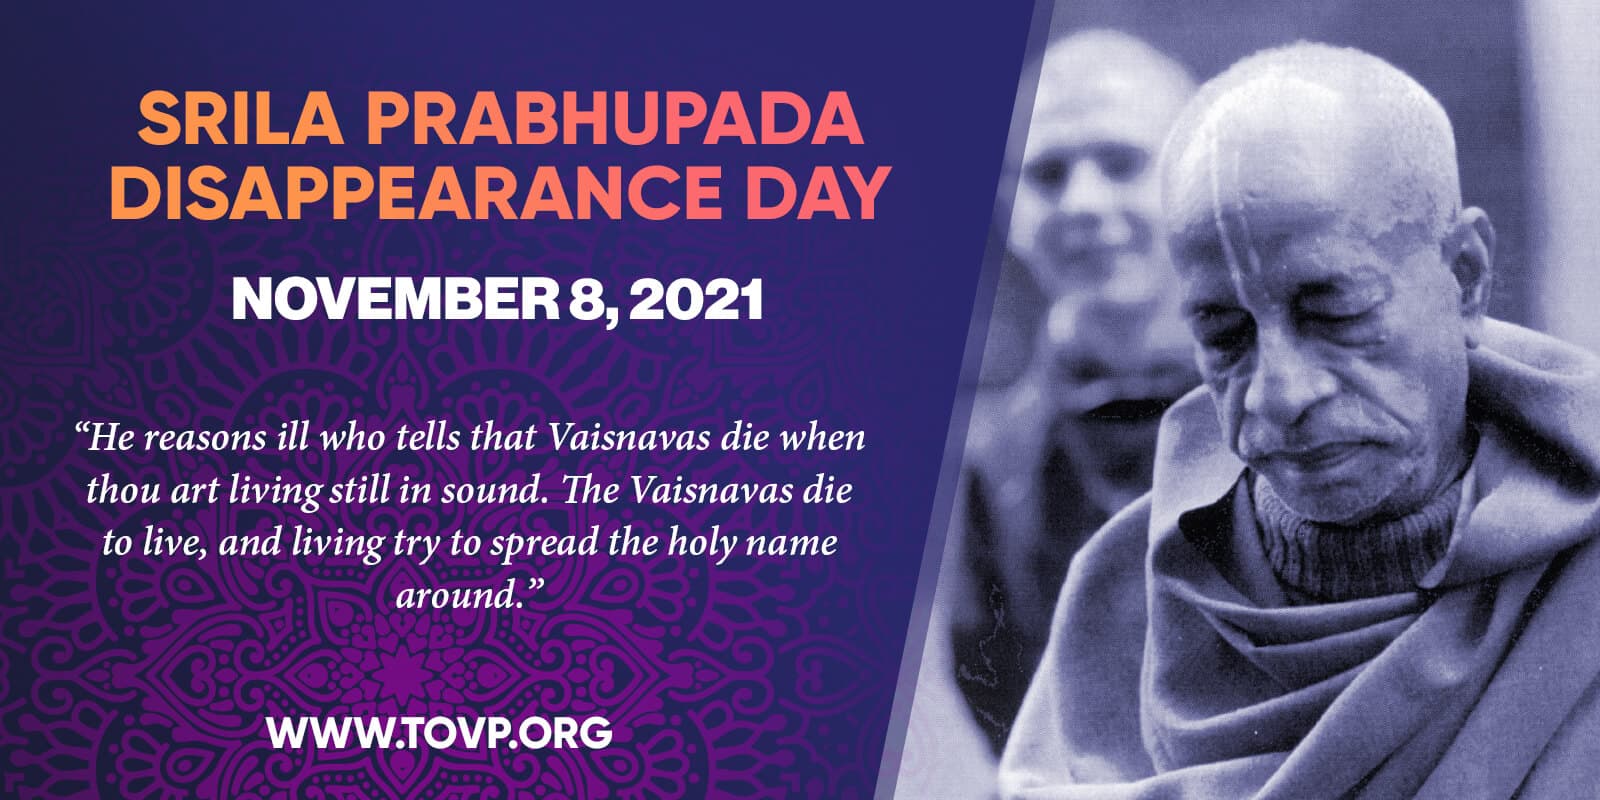 Srila Prabhupada's Disappearance Day and the TOVP